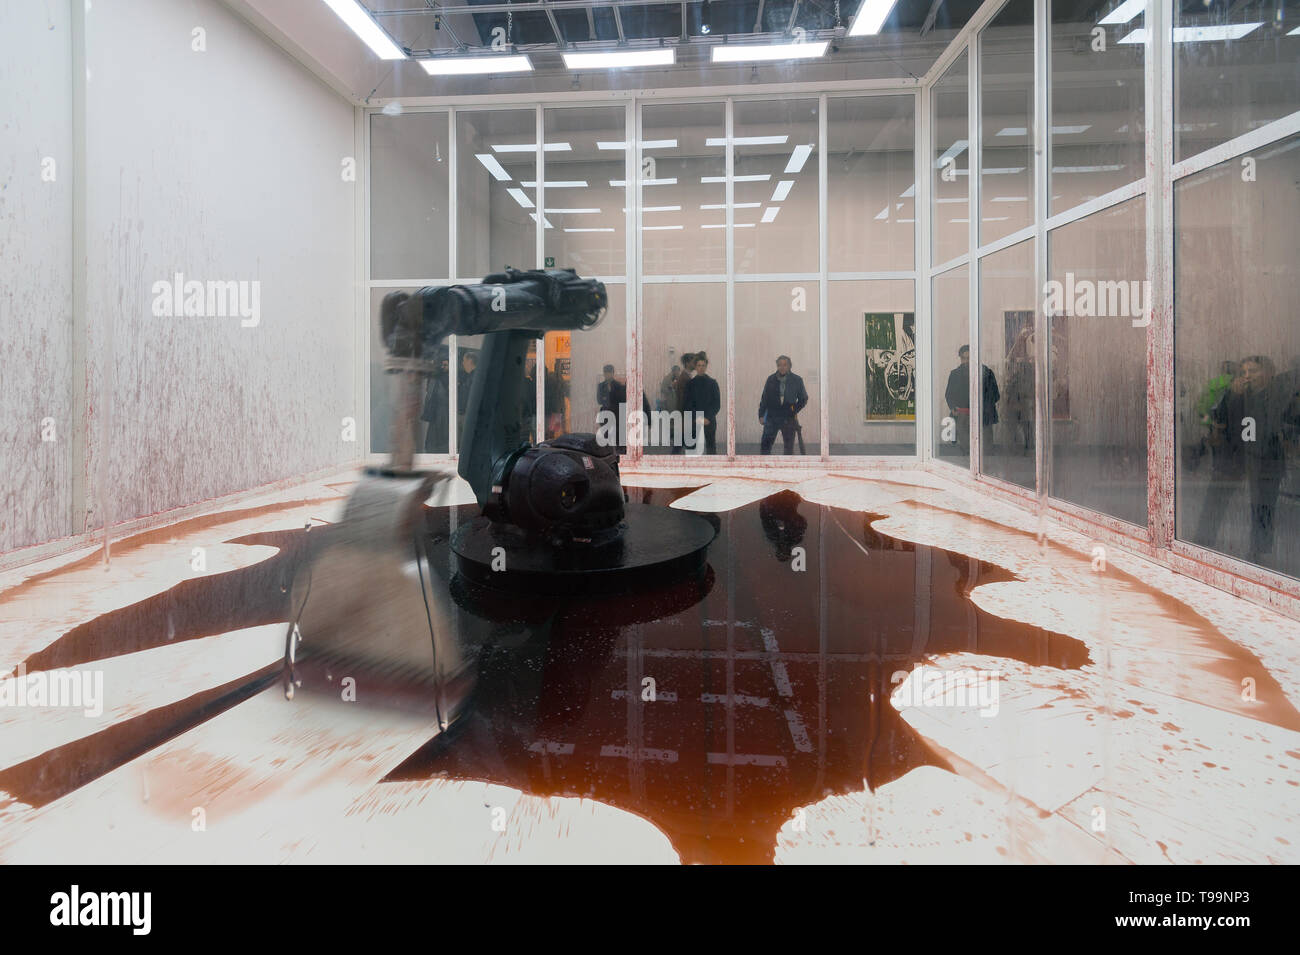 Sun Yuan & Peng Yu, Can't help myself, robotic arm, Giardini exhibition, 58th Venice Art Biennale 2019 Stock Photo